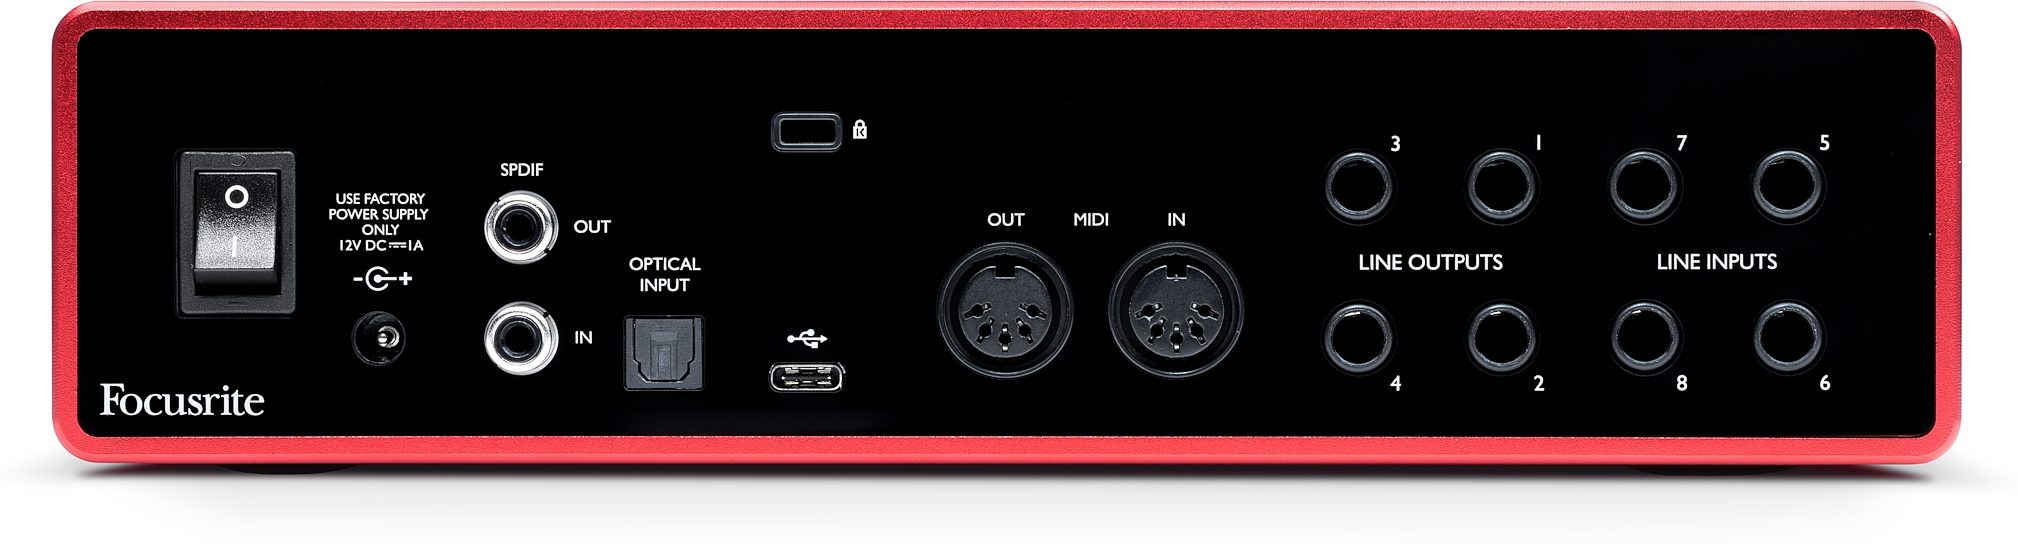 Focusrite Scarlett 18i8 3rd Gen USB Audio Interface | zZounds